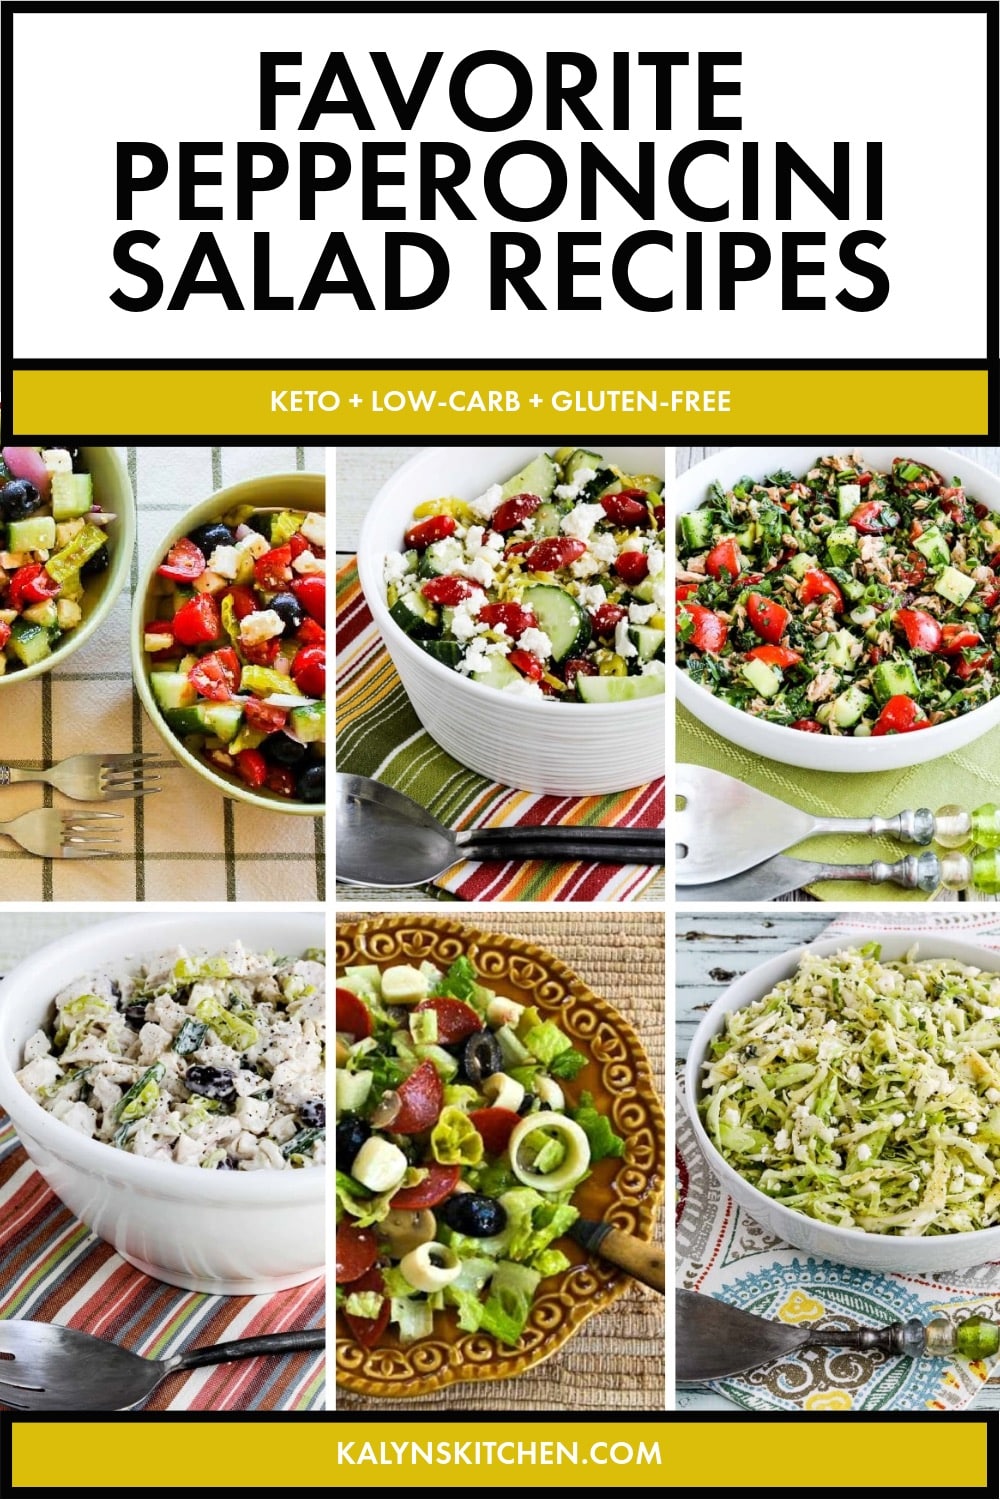 Pinterest image of Favorite Pepperoncini Salad Recipes